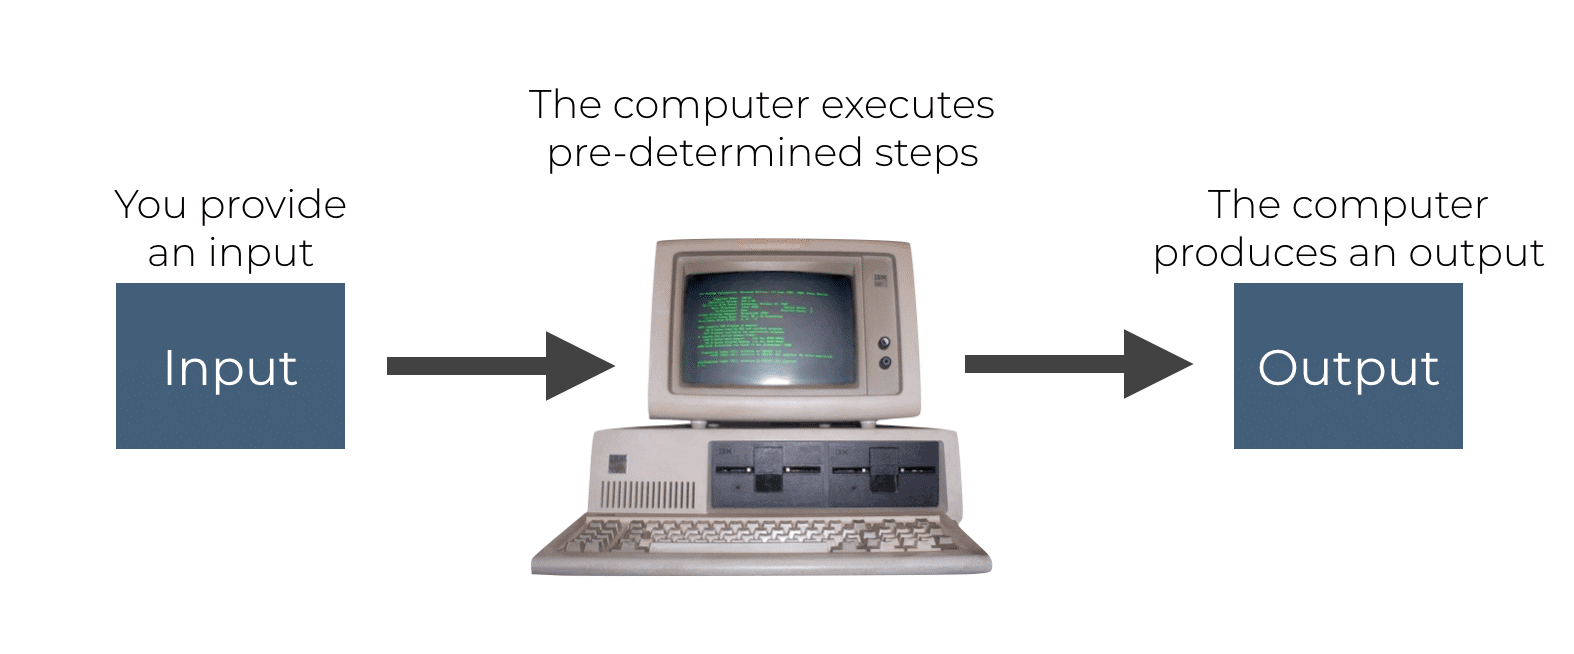 An image that shows how a computer transforms an input into an output.